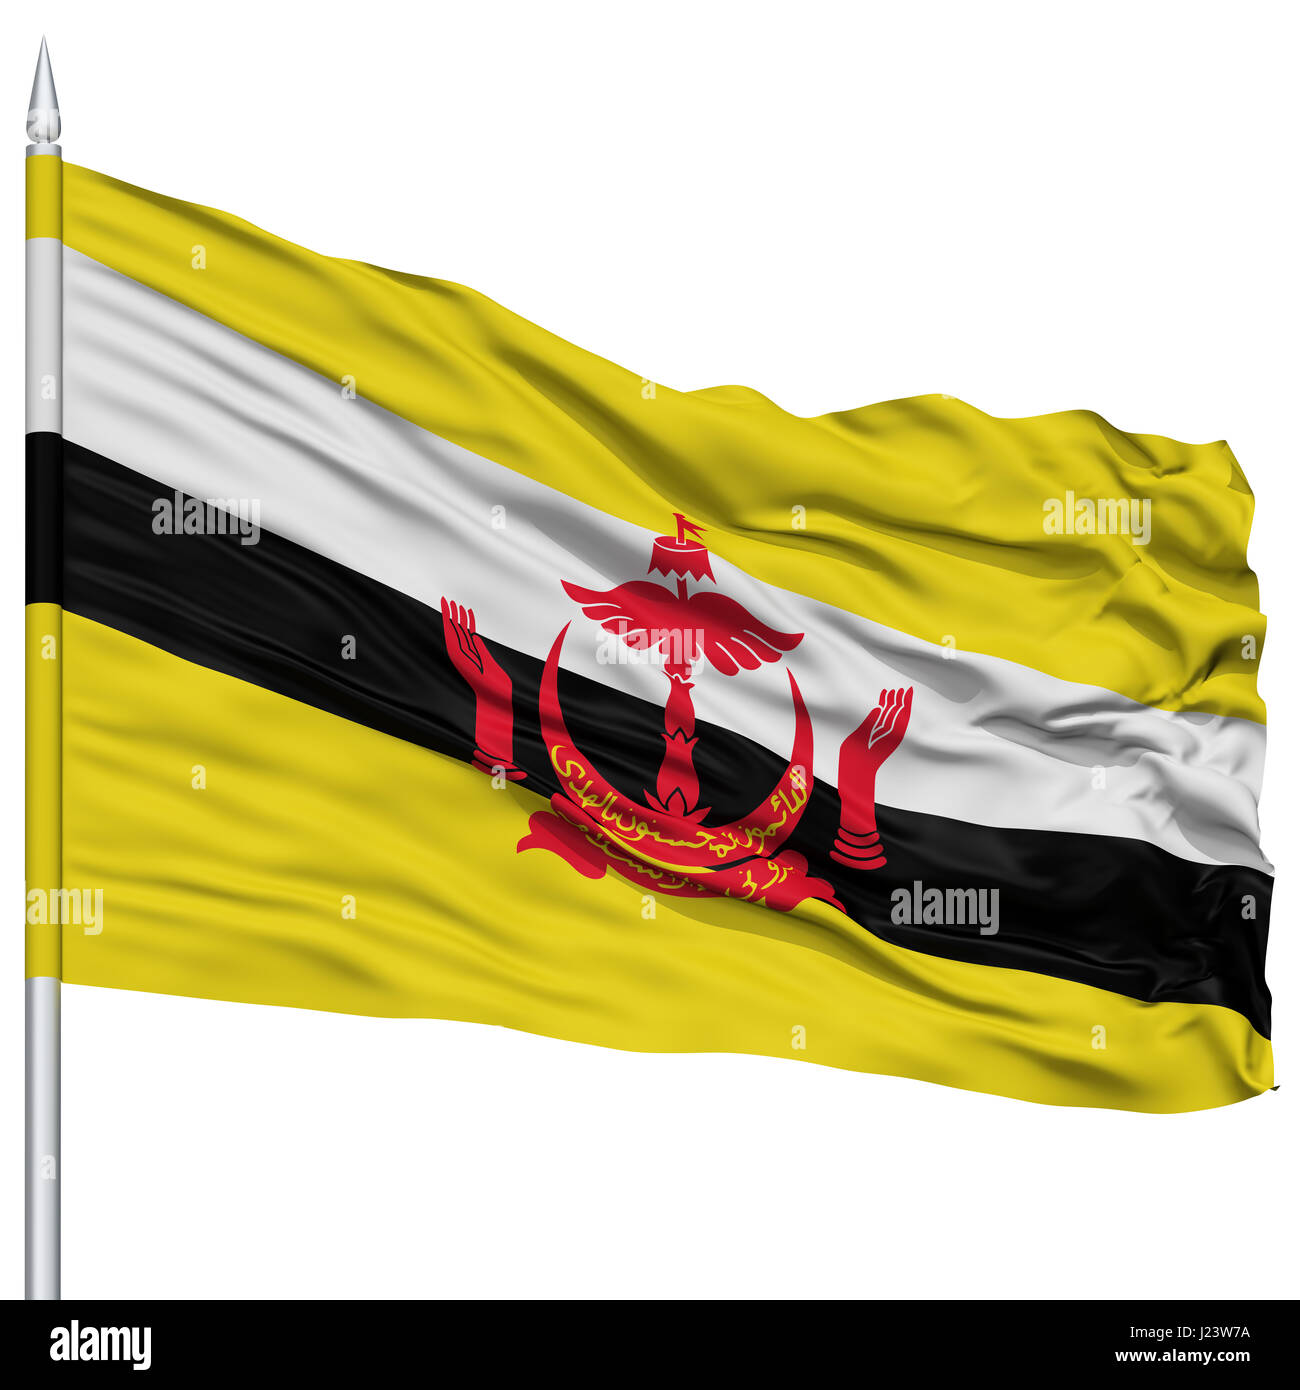 Bandar Seri Begawan City Flag on Flagpole Stock Photo